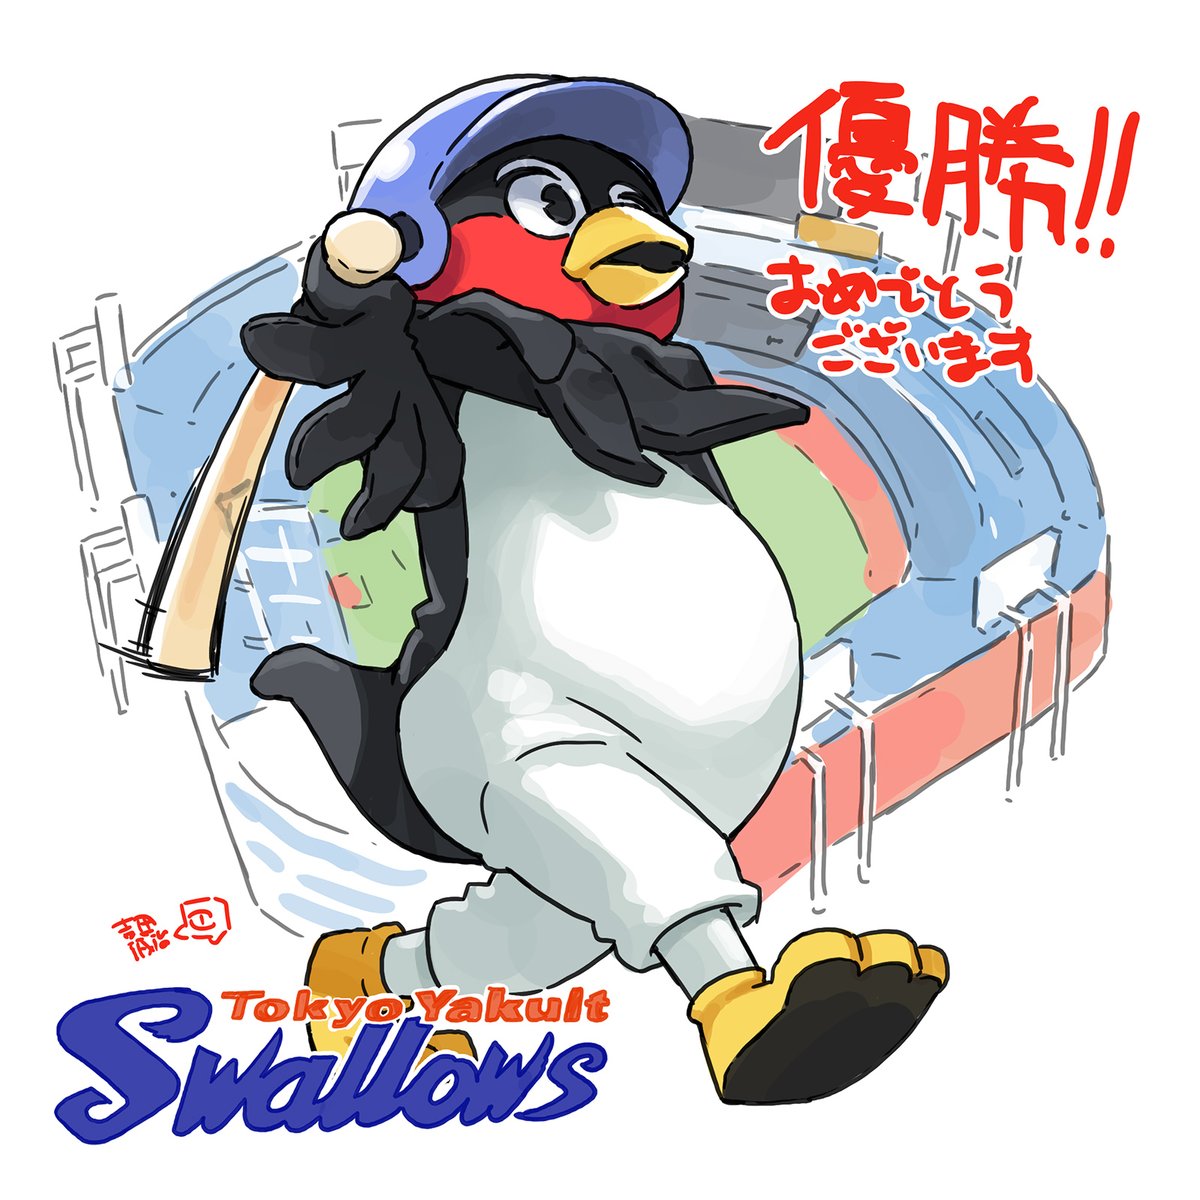 penguin solo bird copyright name blue headwear animal costume no humans  illustration images